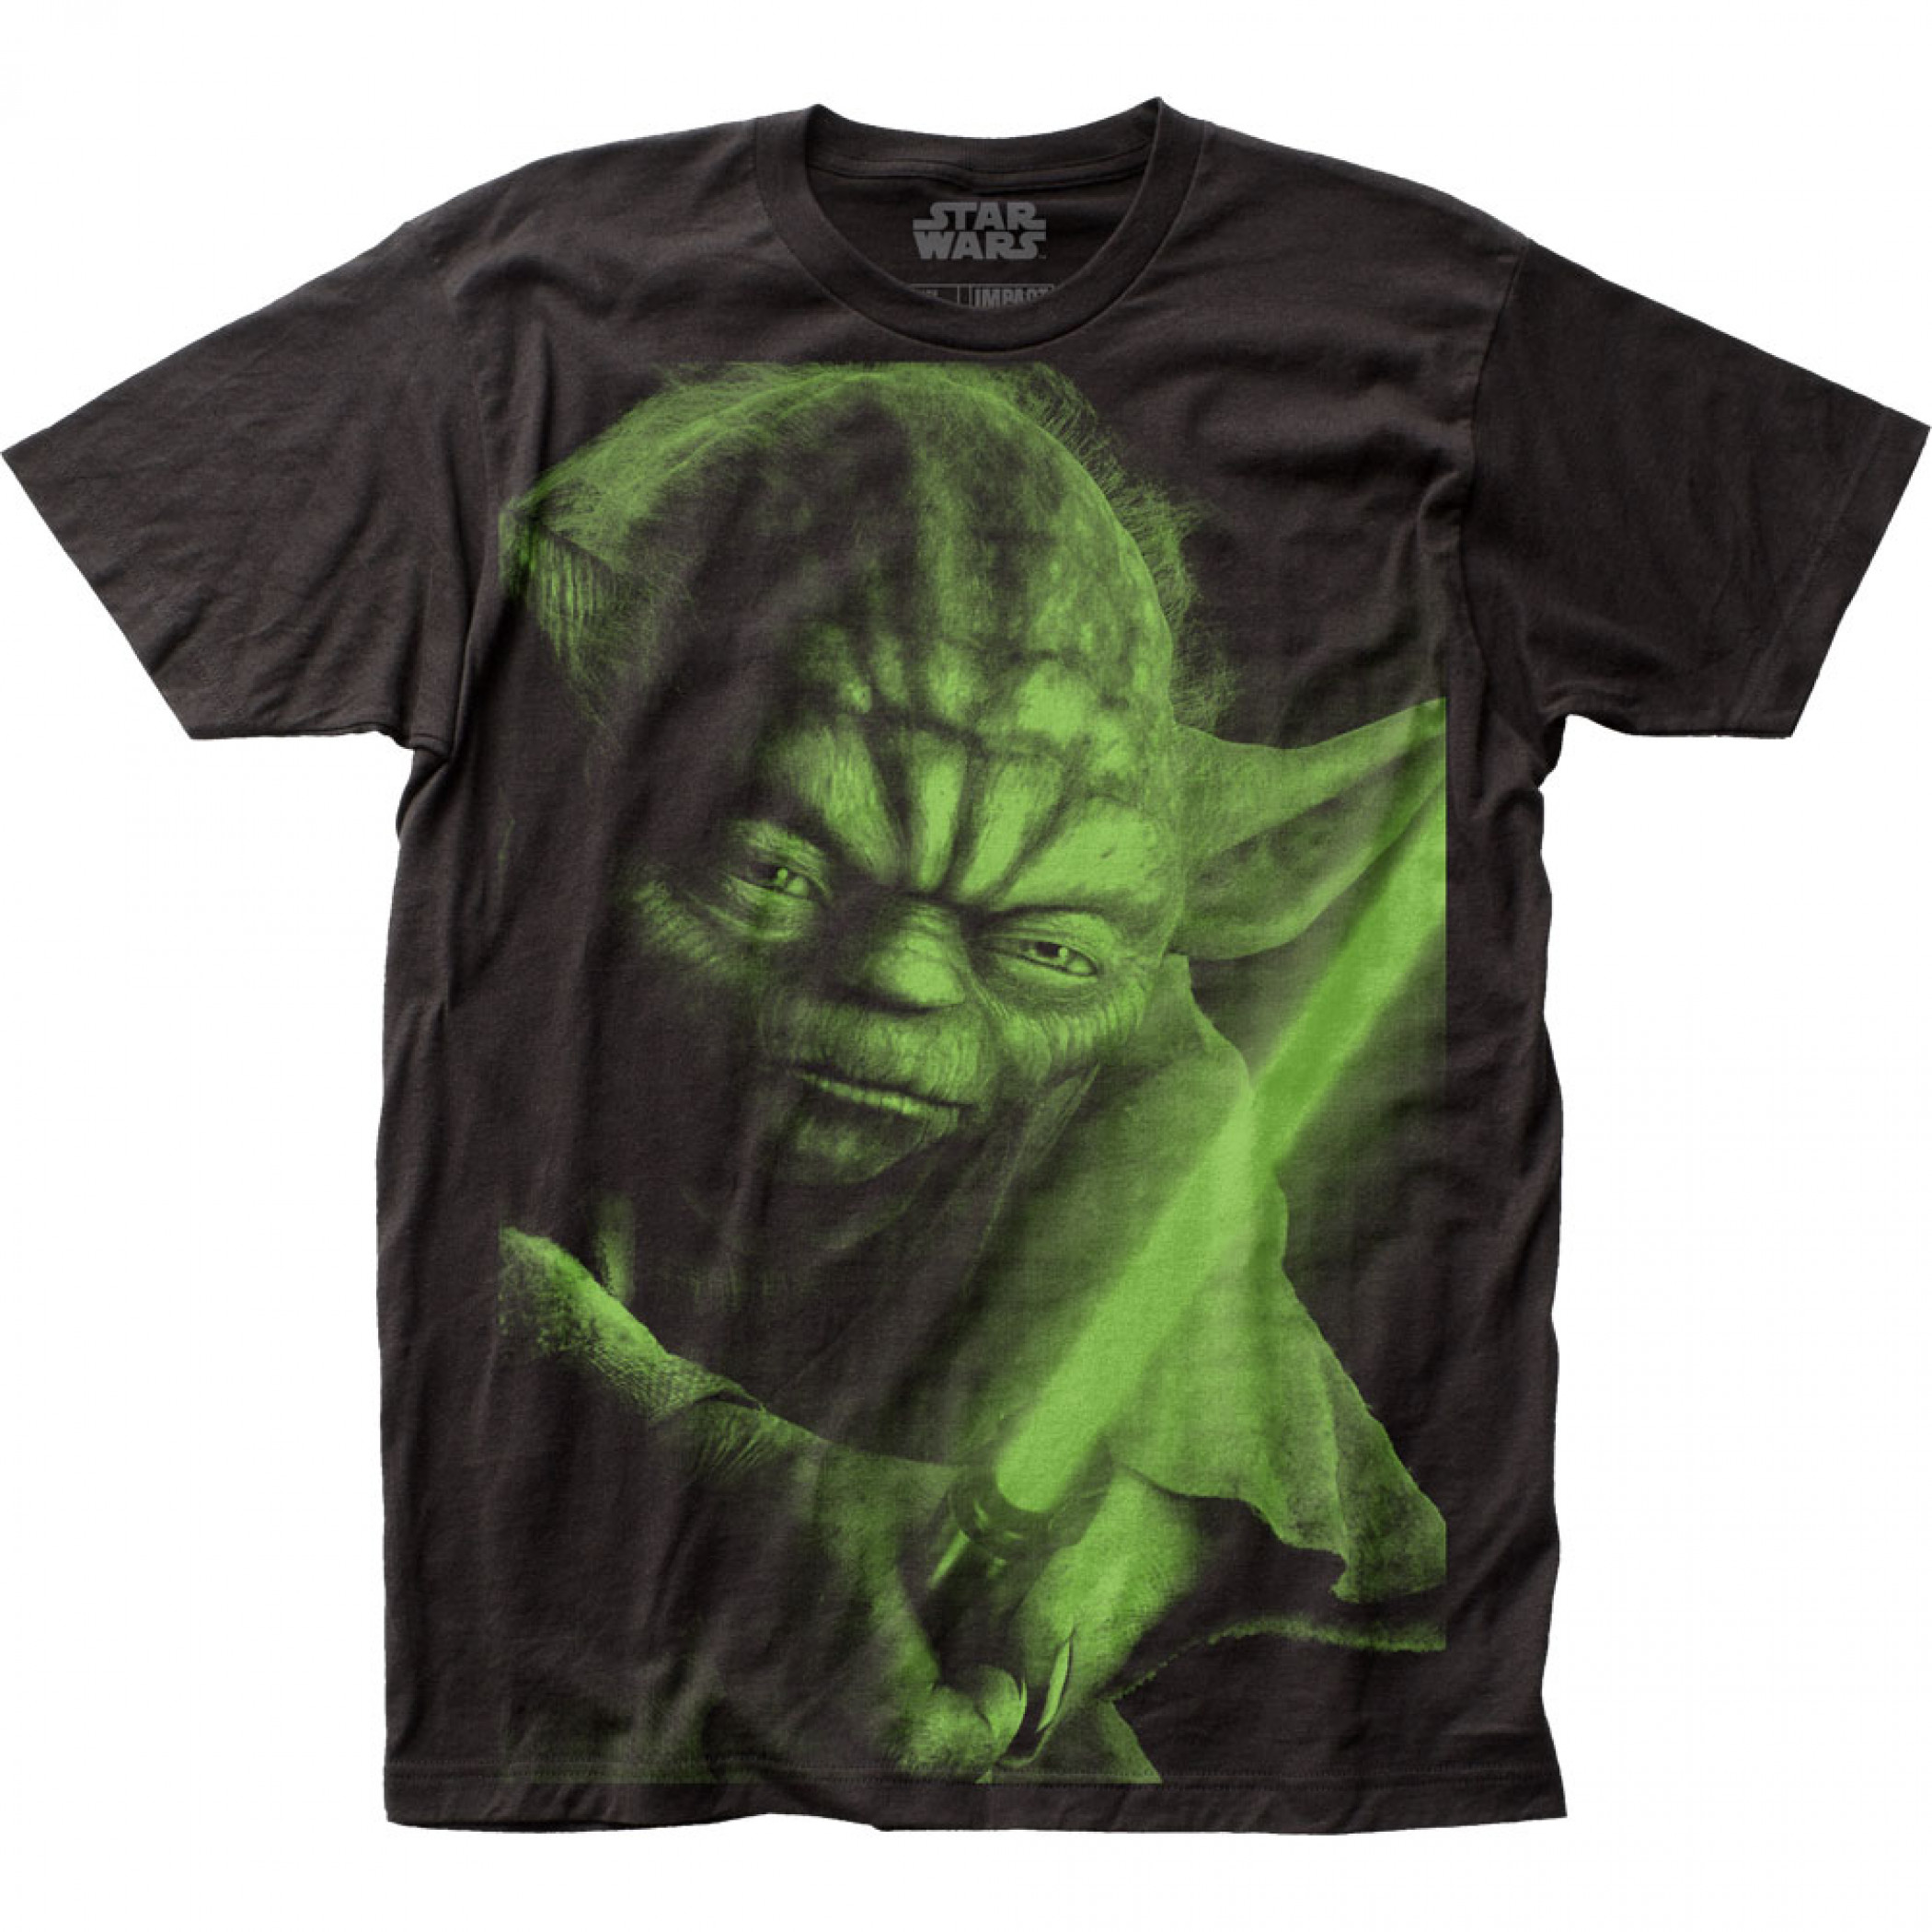 Star Wars Yoda Full Size Subway Print T-Shirt